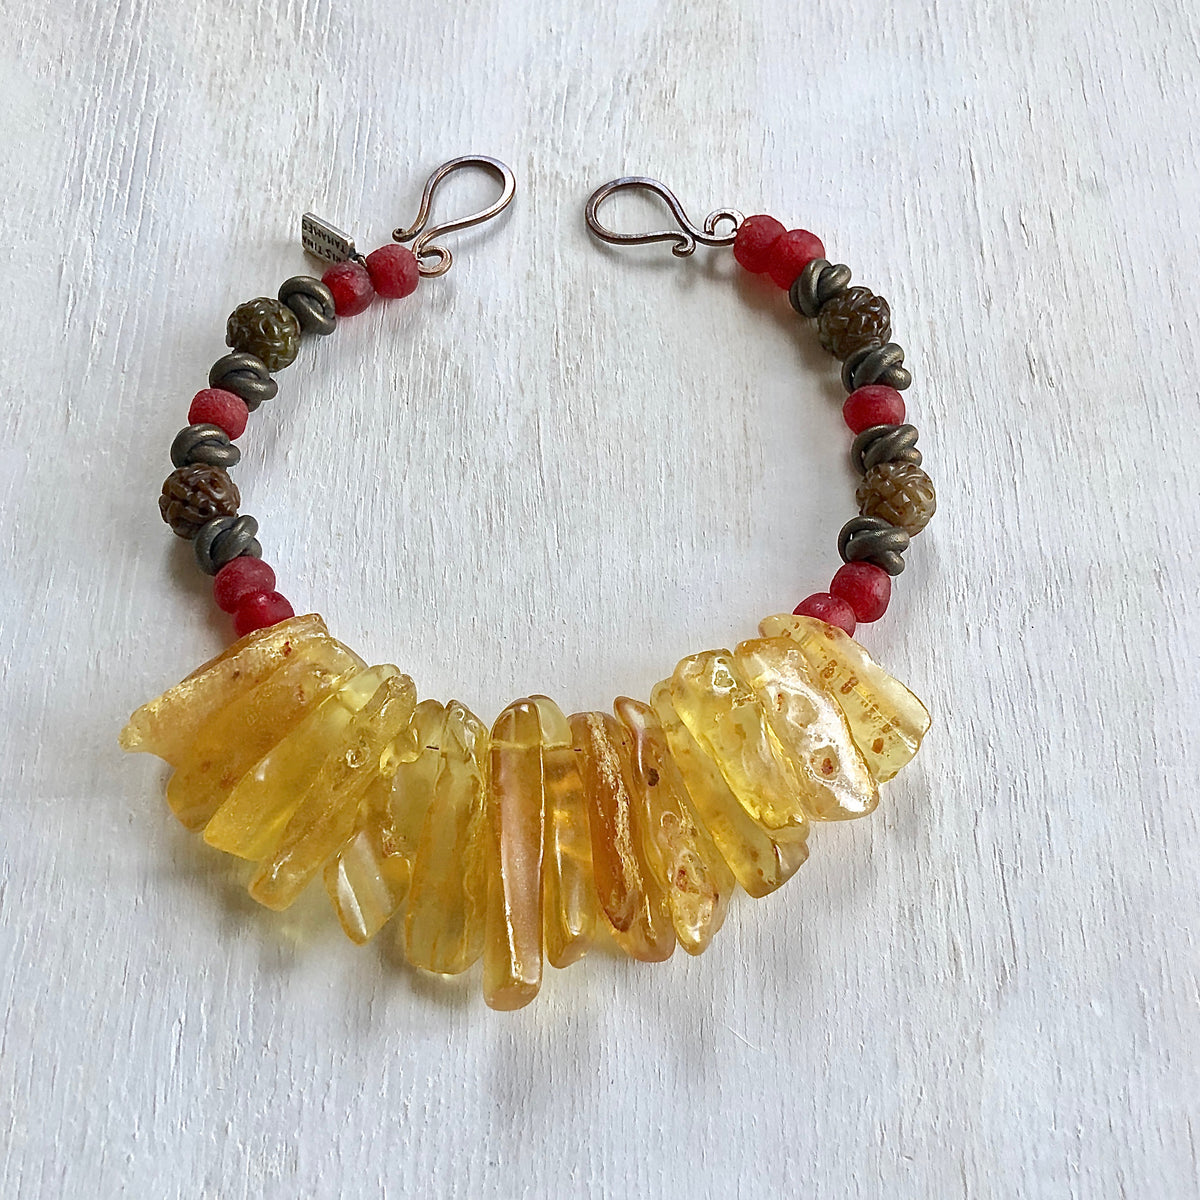 Amber jade African trade beads necklace. Cristina Tamames Jewelry Designer